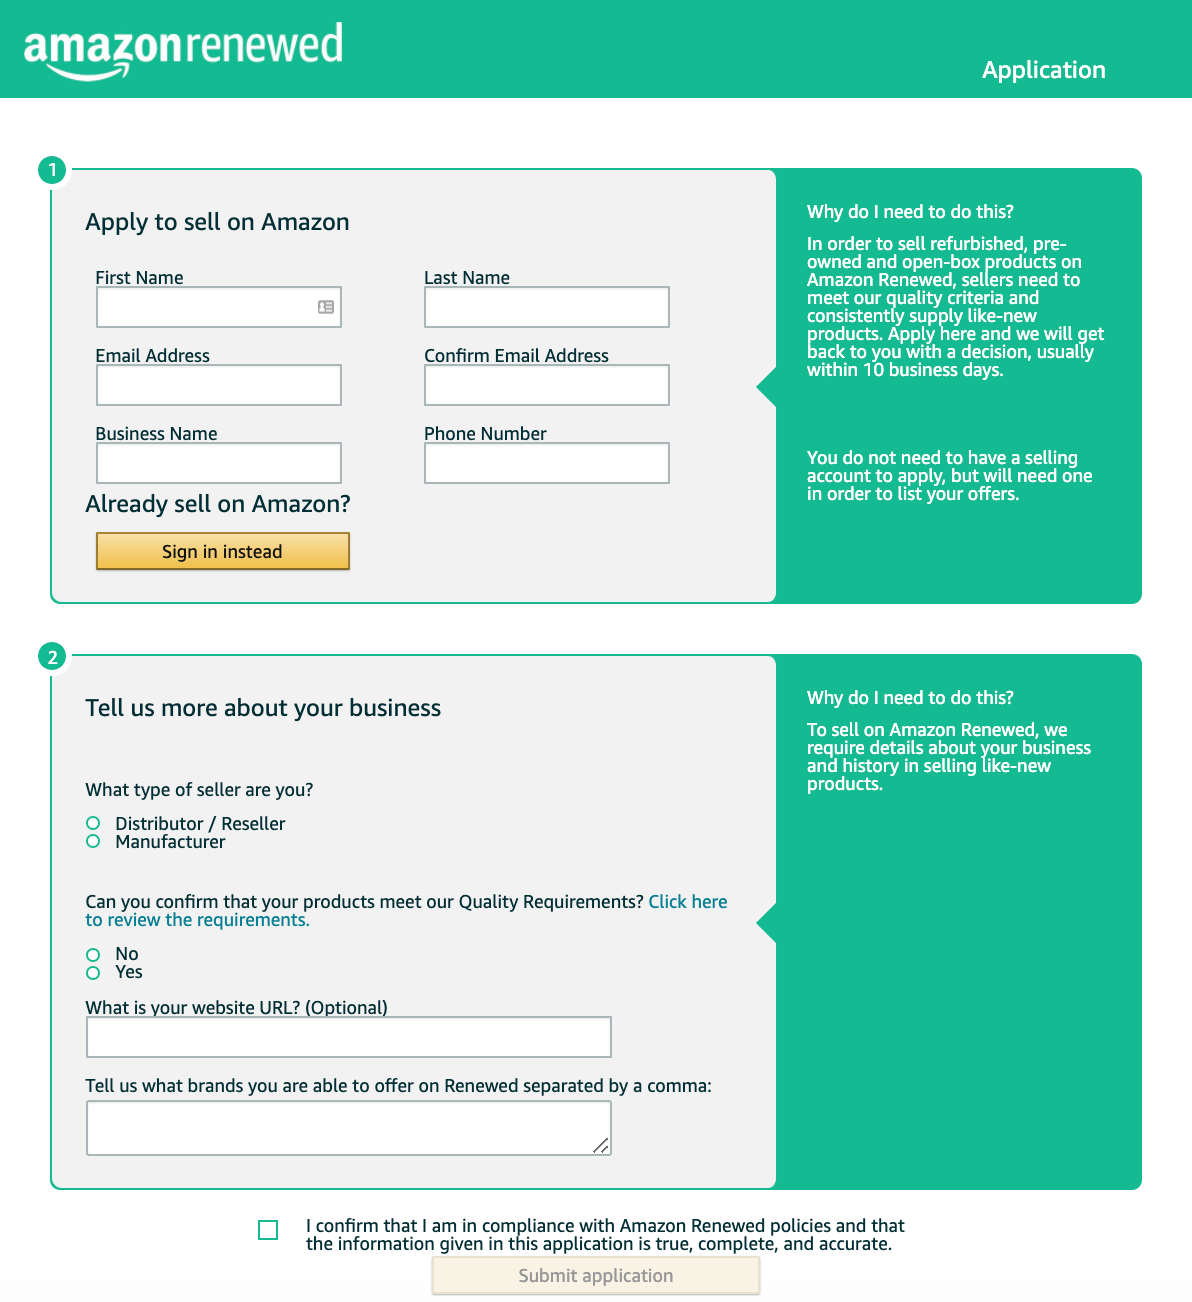 Amazon Renewed: application form